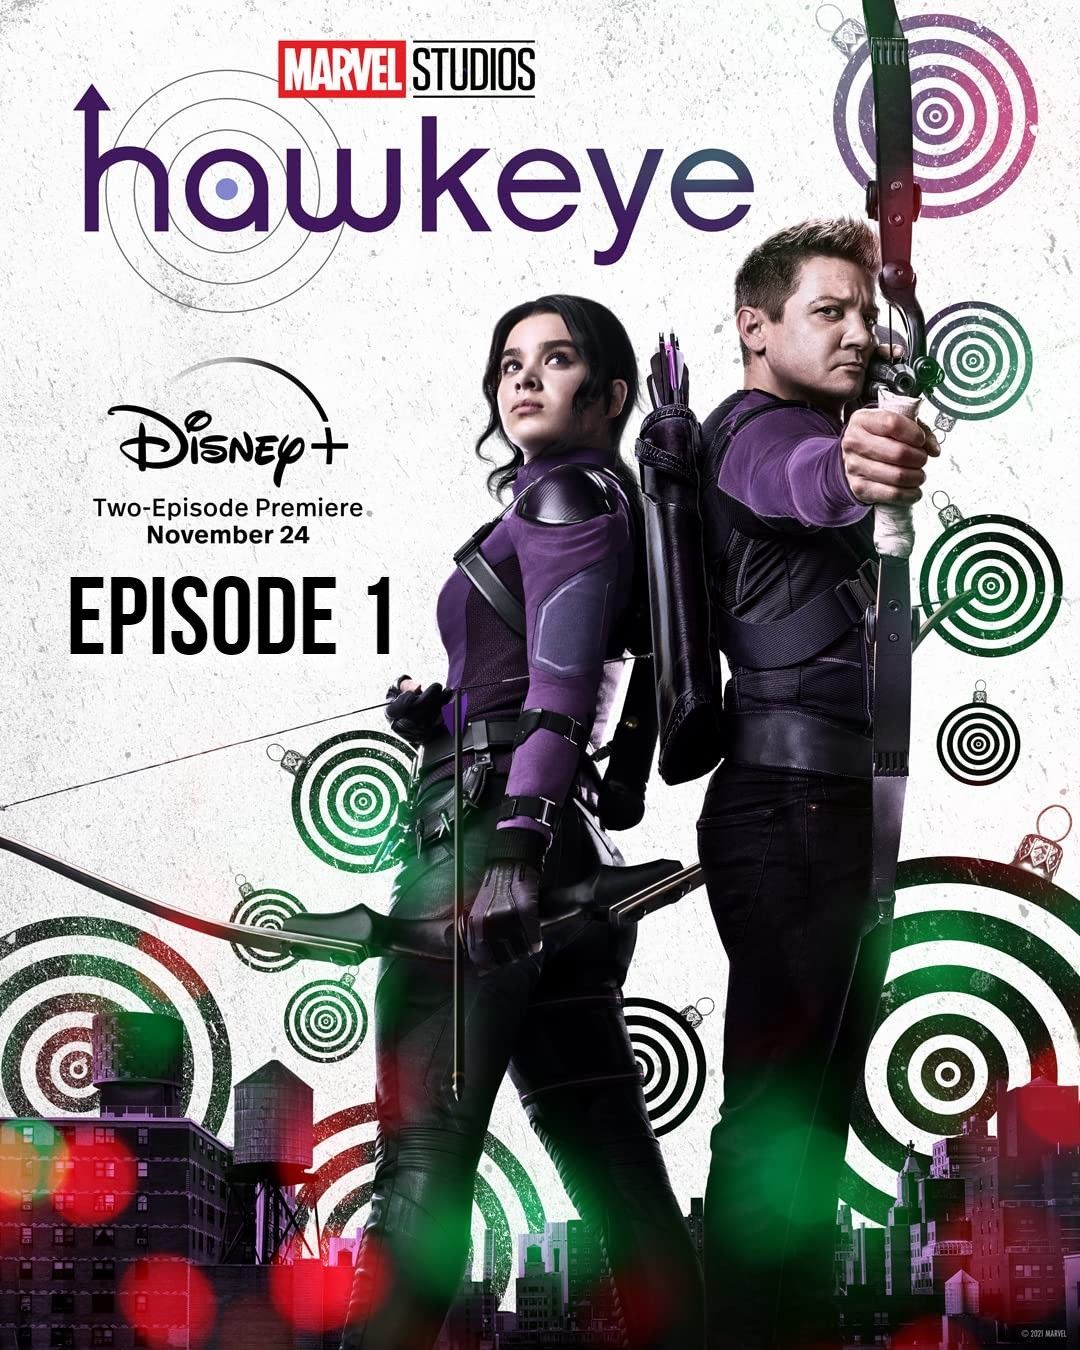 Hawkeye Season 1 (2021) Episode 3 Hindi Dubbed Marvel TV Series download full movie